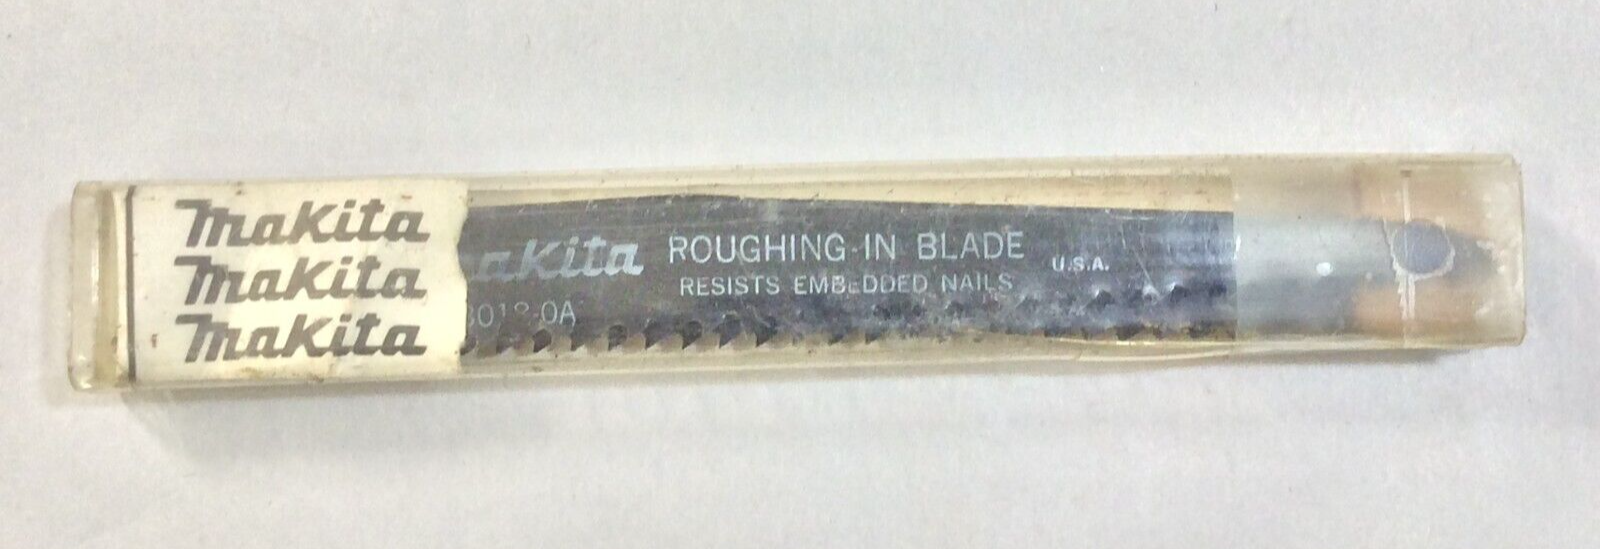 Makita Reciprocating Saw Blades 6" 723018-OA Lot 6 Roughing In Wood Blade USA - $12.16